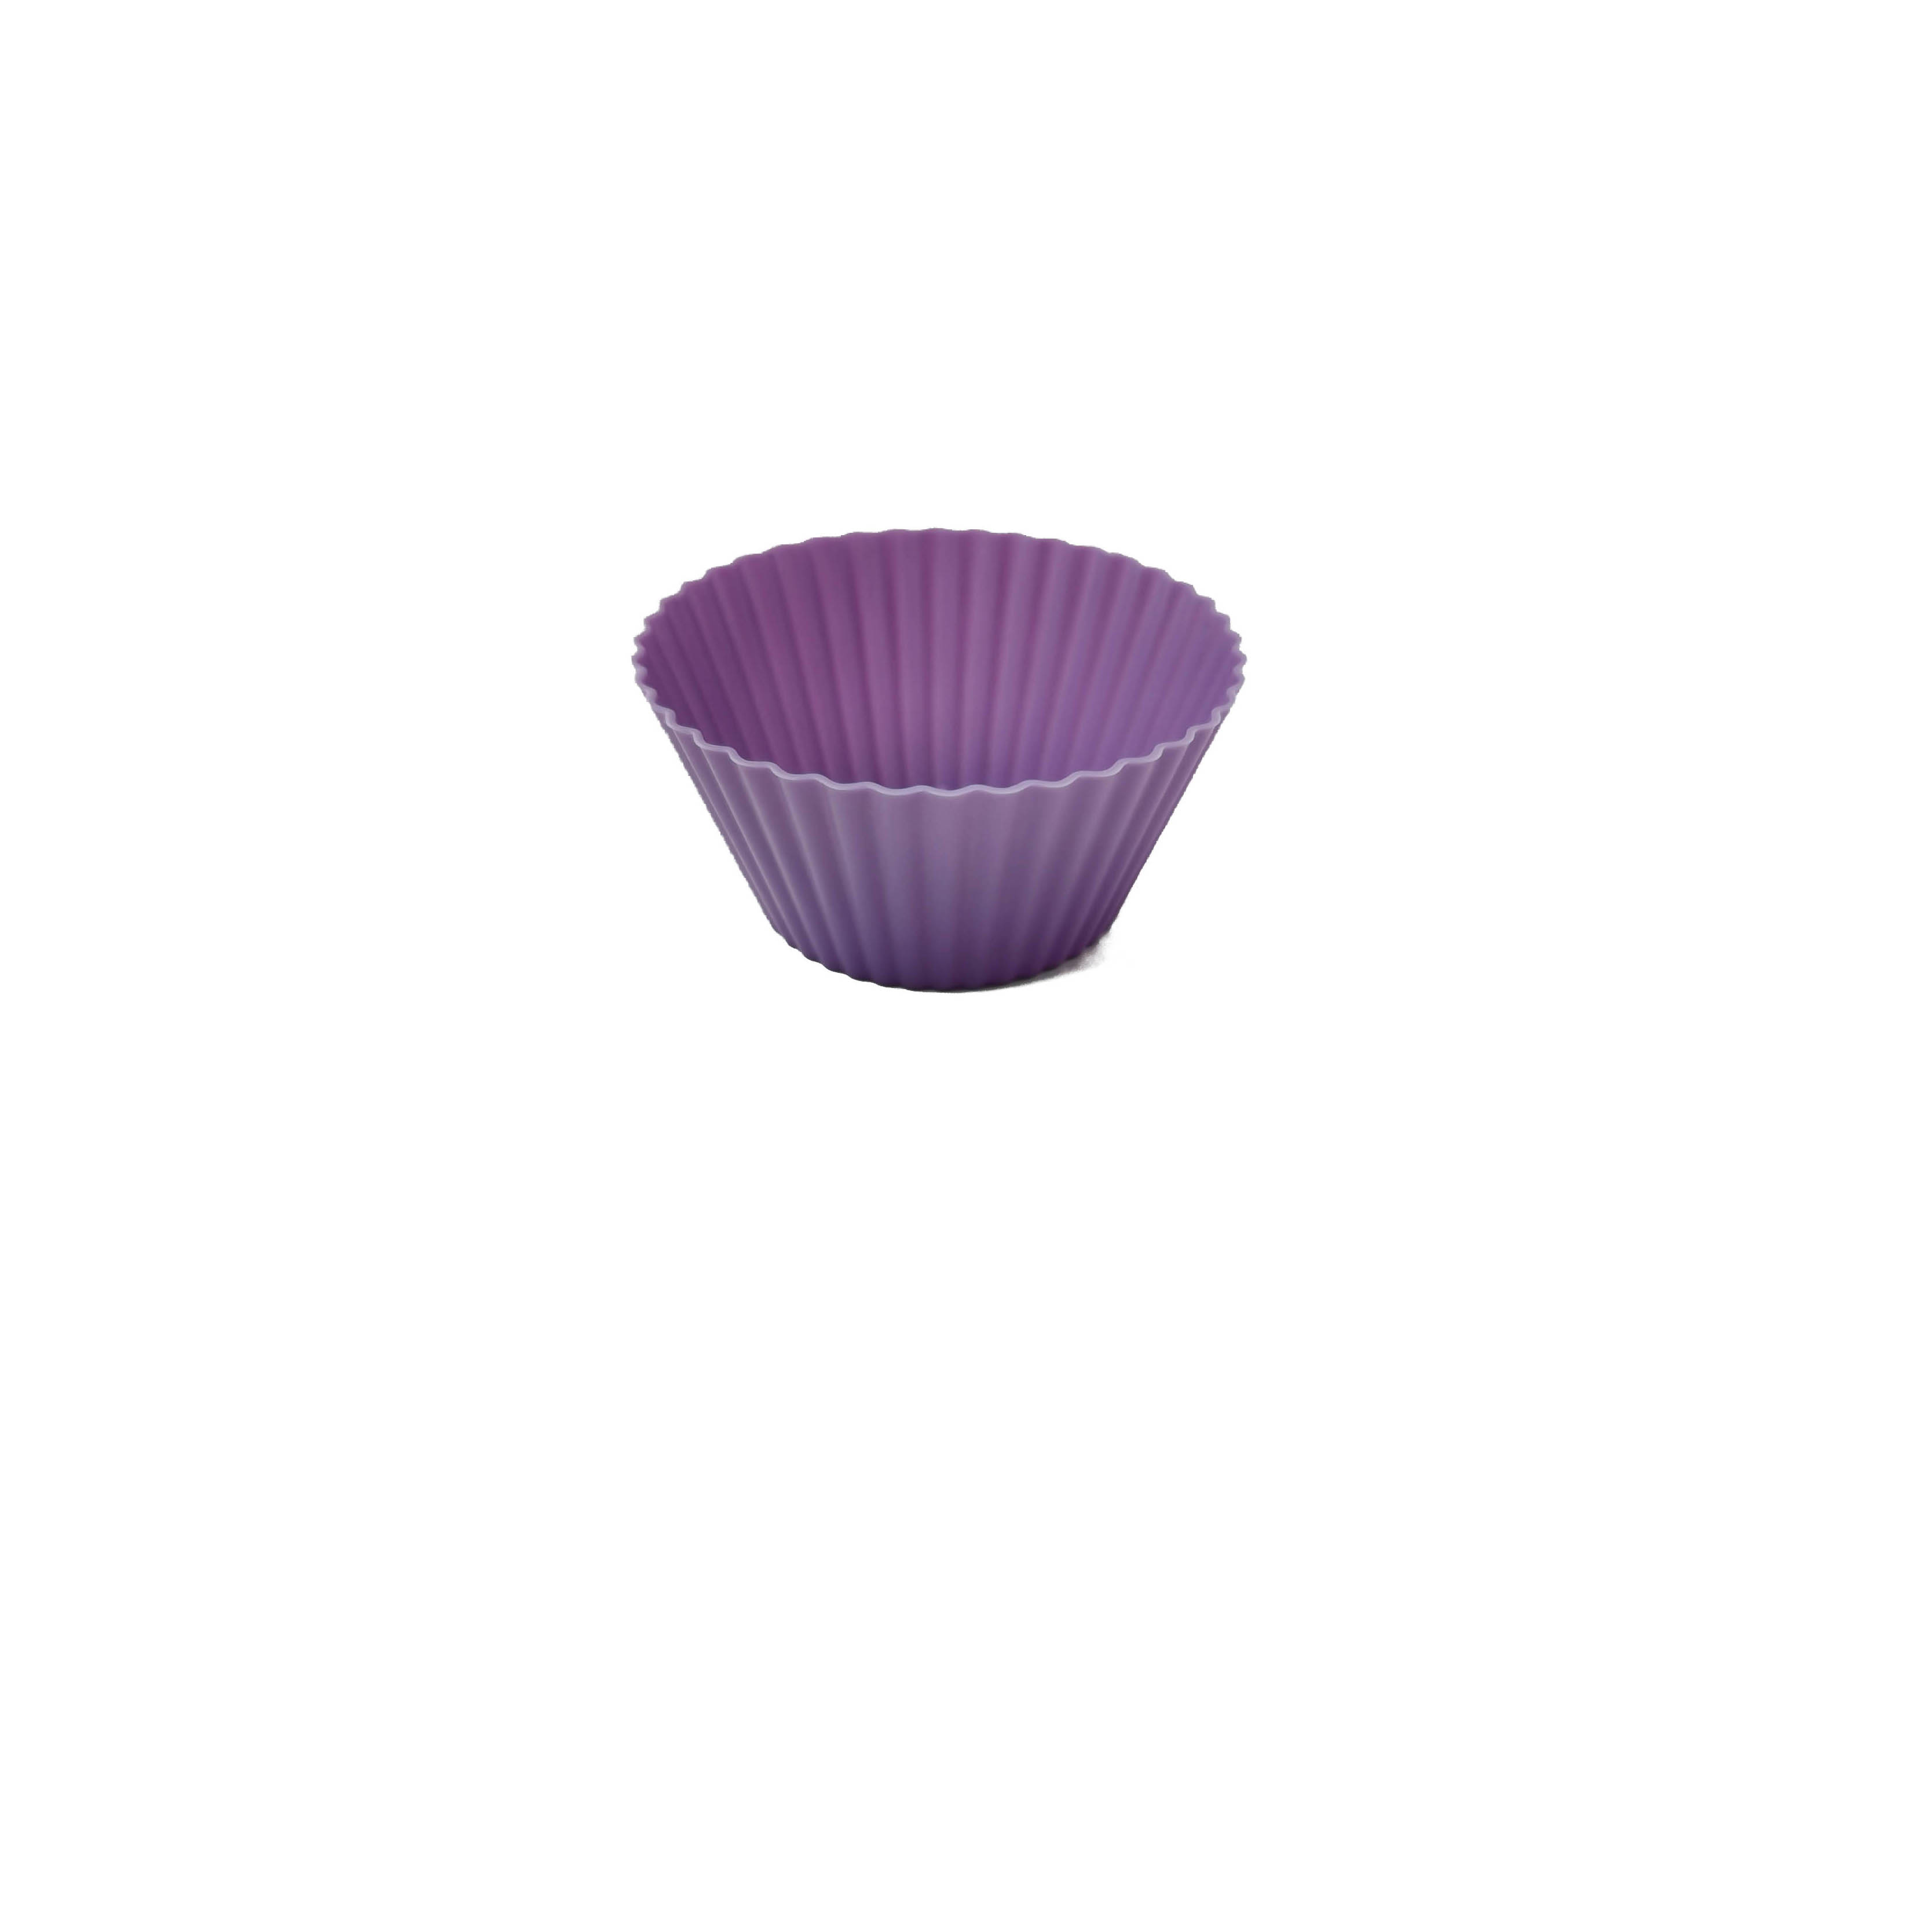 BM031 Kleine Tasse Kuchenform | Silikon-Kuchenform